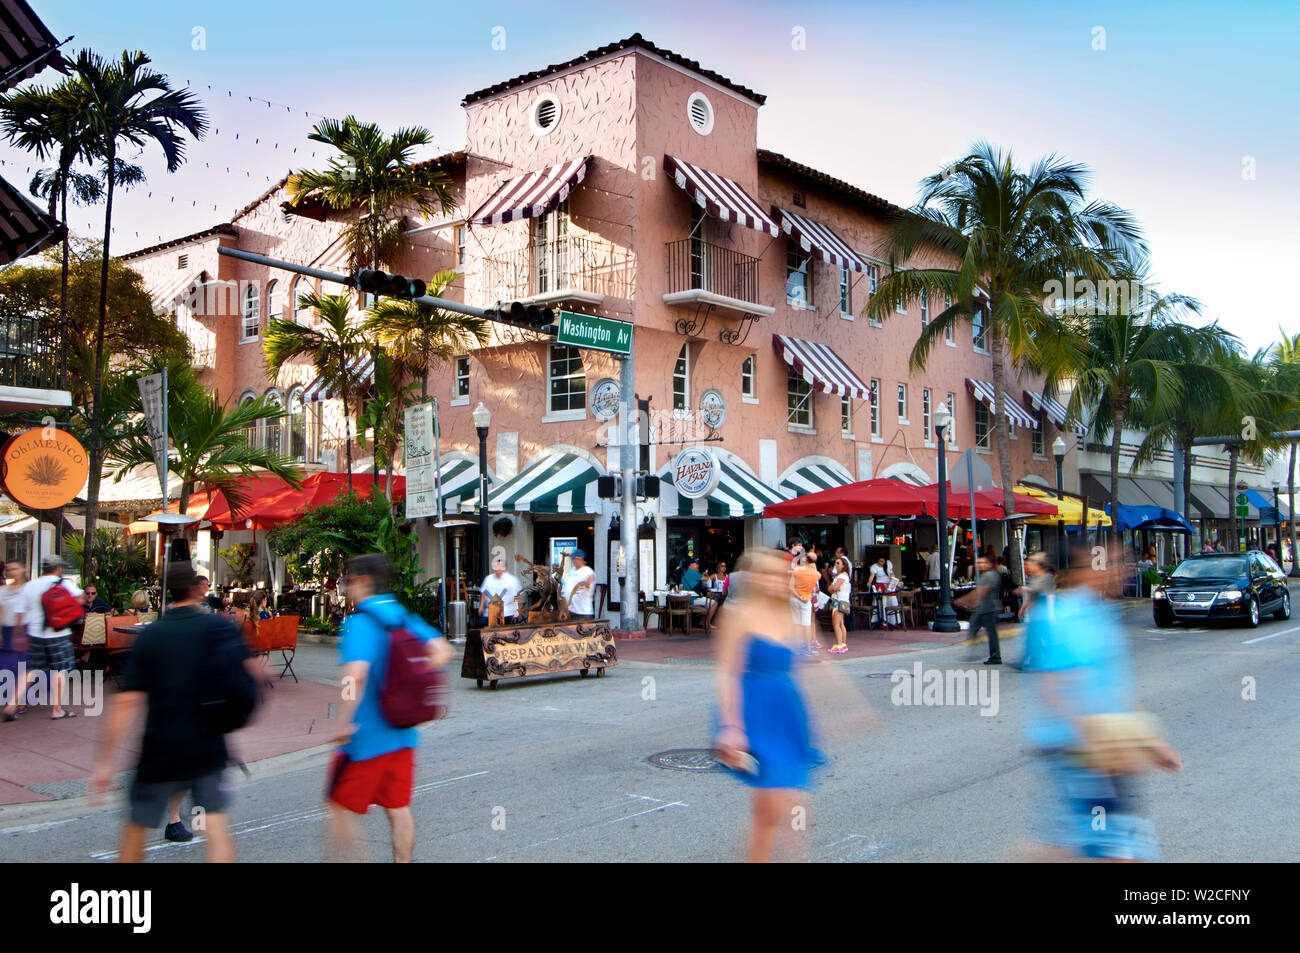 Florida, Miami Beach, South Beach, Espanola Way, Corner of Washington Avenue, Restaurants, Spanish Colonial Architecture, Pedestrian Friendly Stock Photo